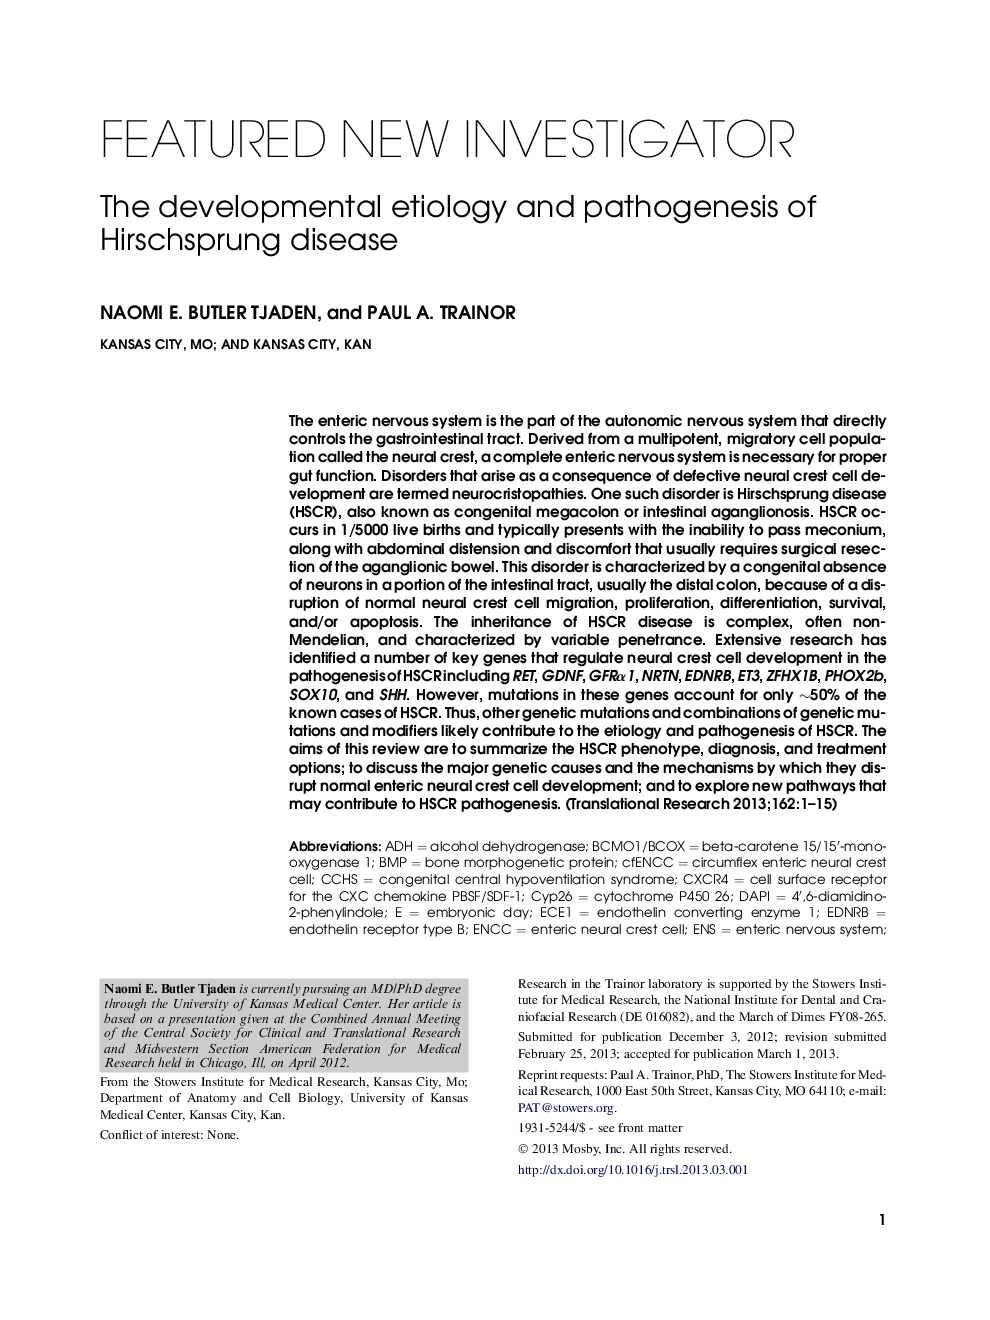 The developmental etiology and pathogenesis of Hirschsprung disease 